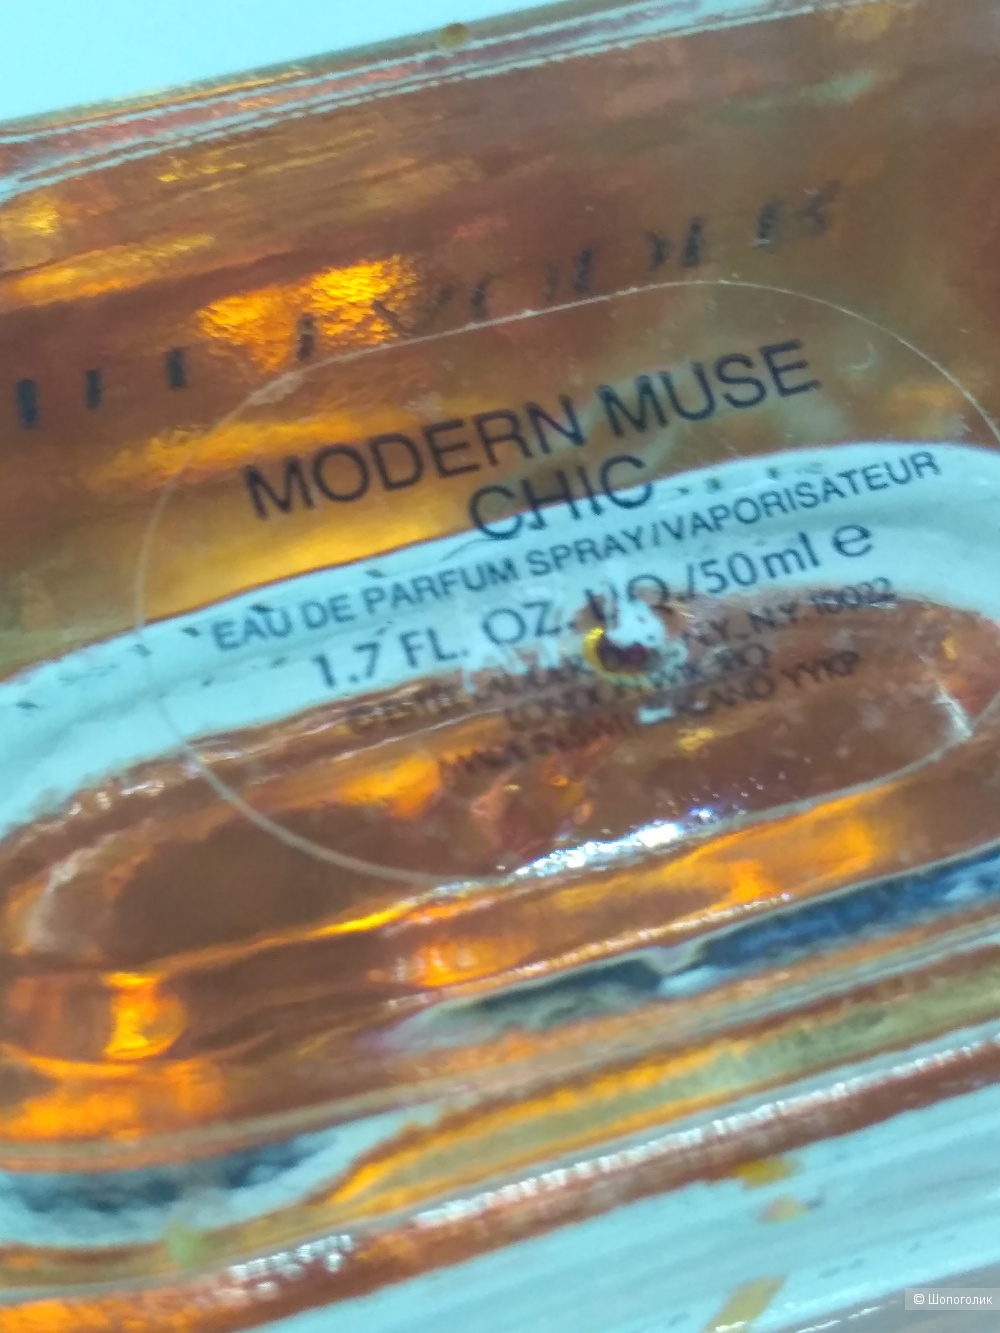 Estee Lauder Modern muse chic парфюмерная вода от 50 мл